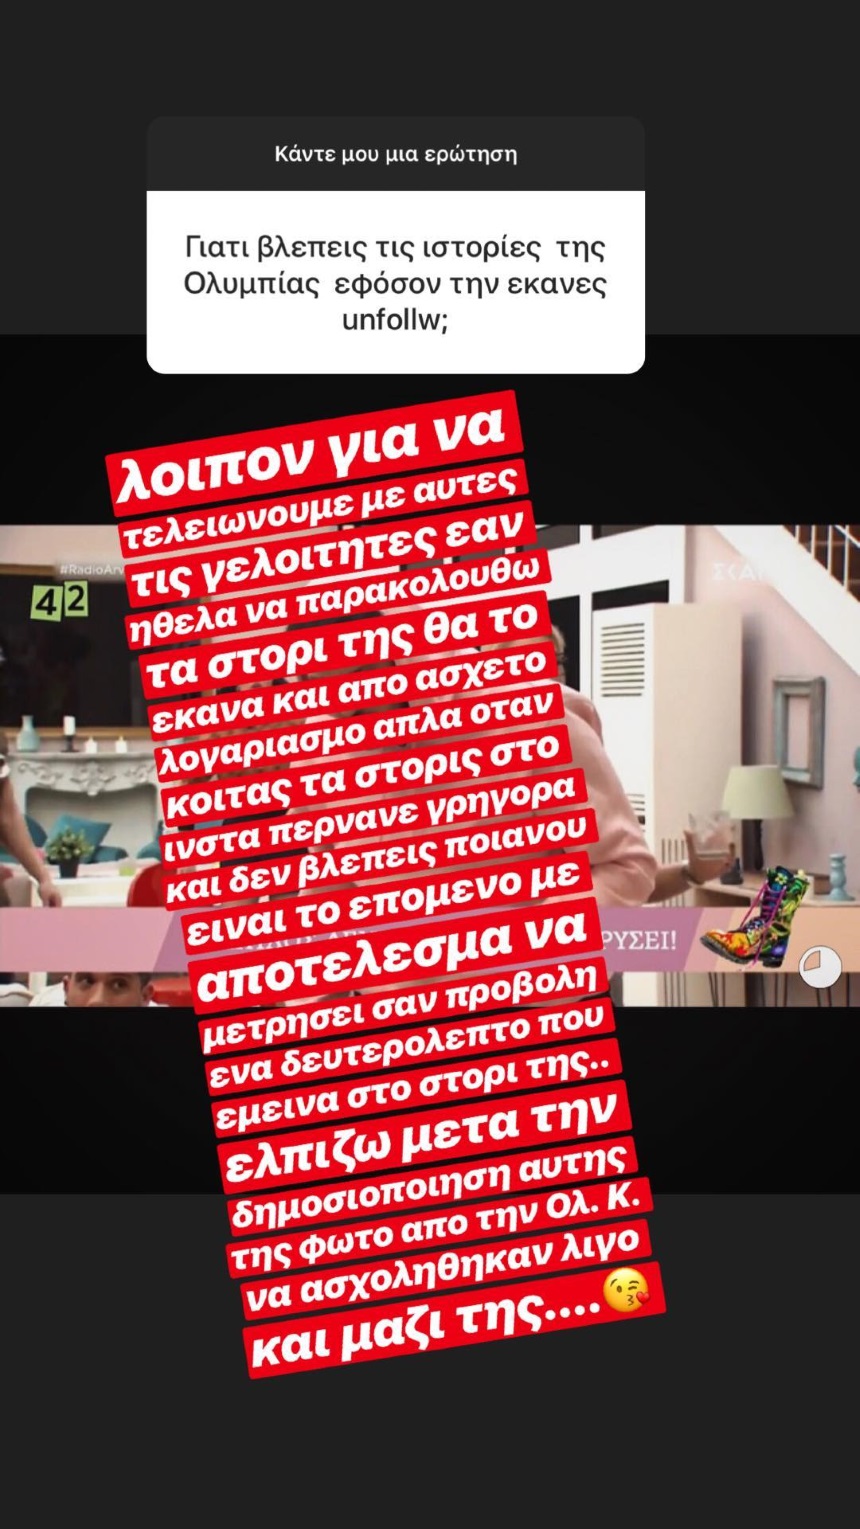 Power of Love: Άγριος τσακωμός μεταξύ Ολυμπίας και Ίονα στο Instagram! Τι συμβαίνει;